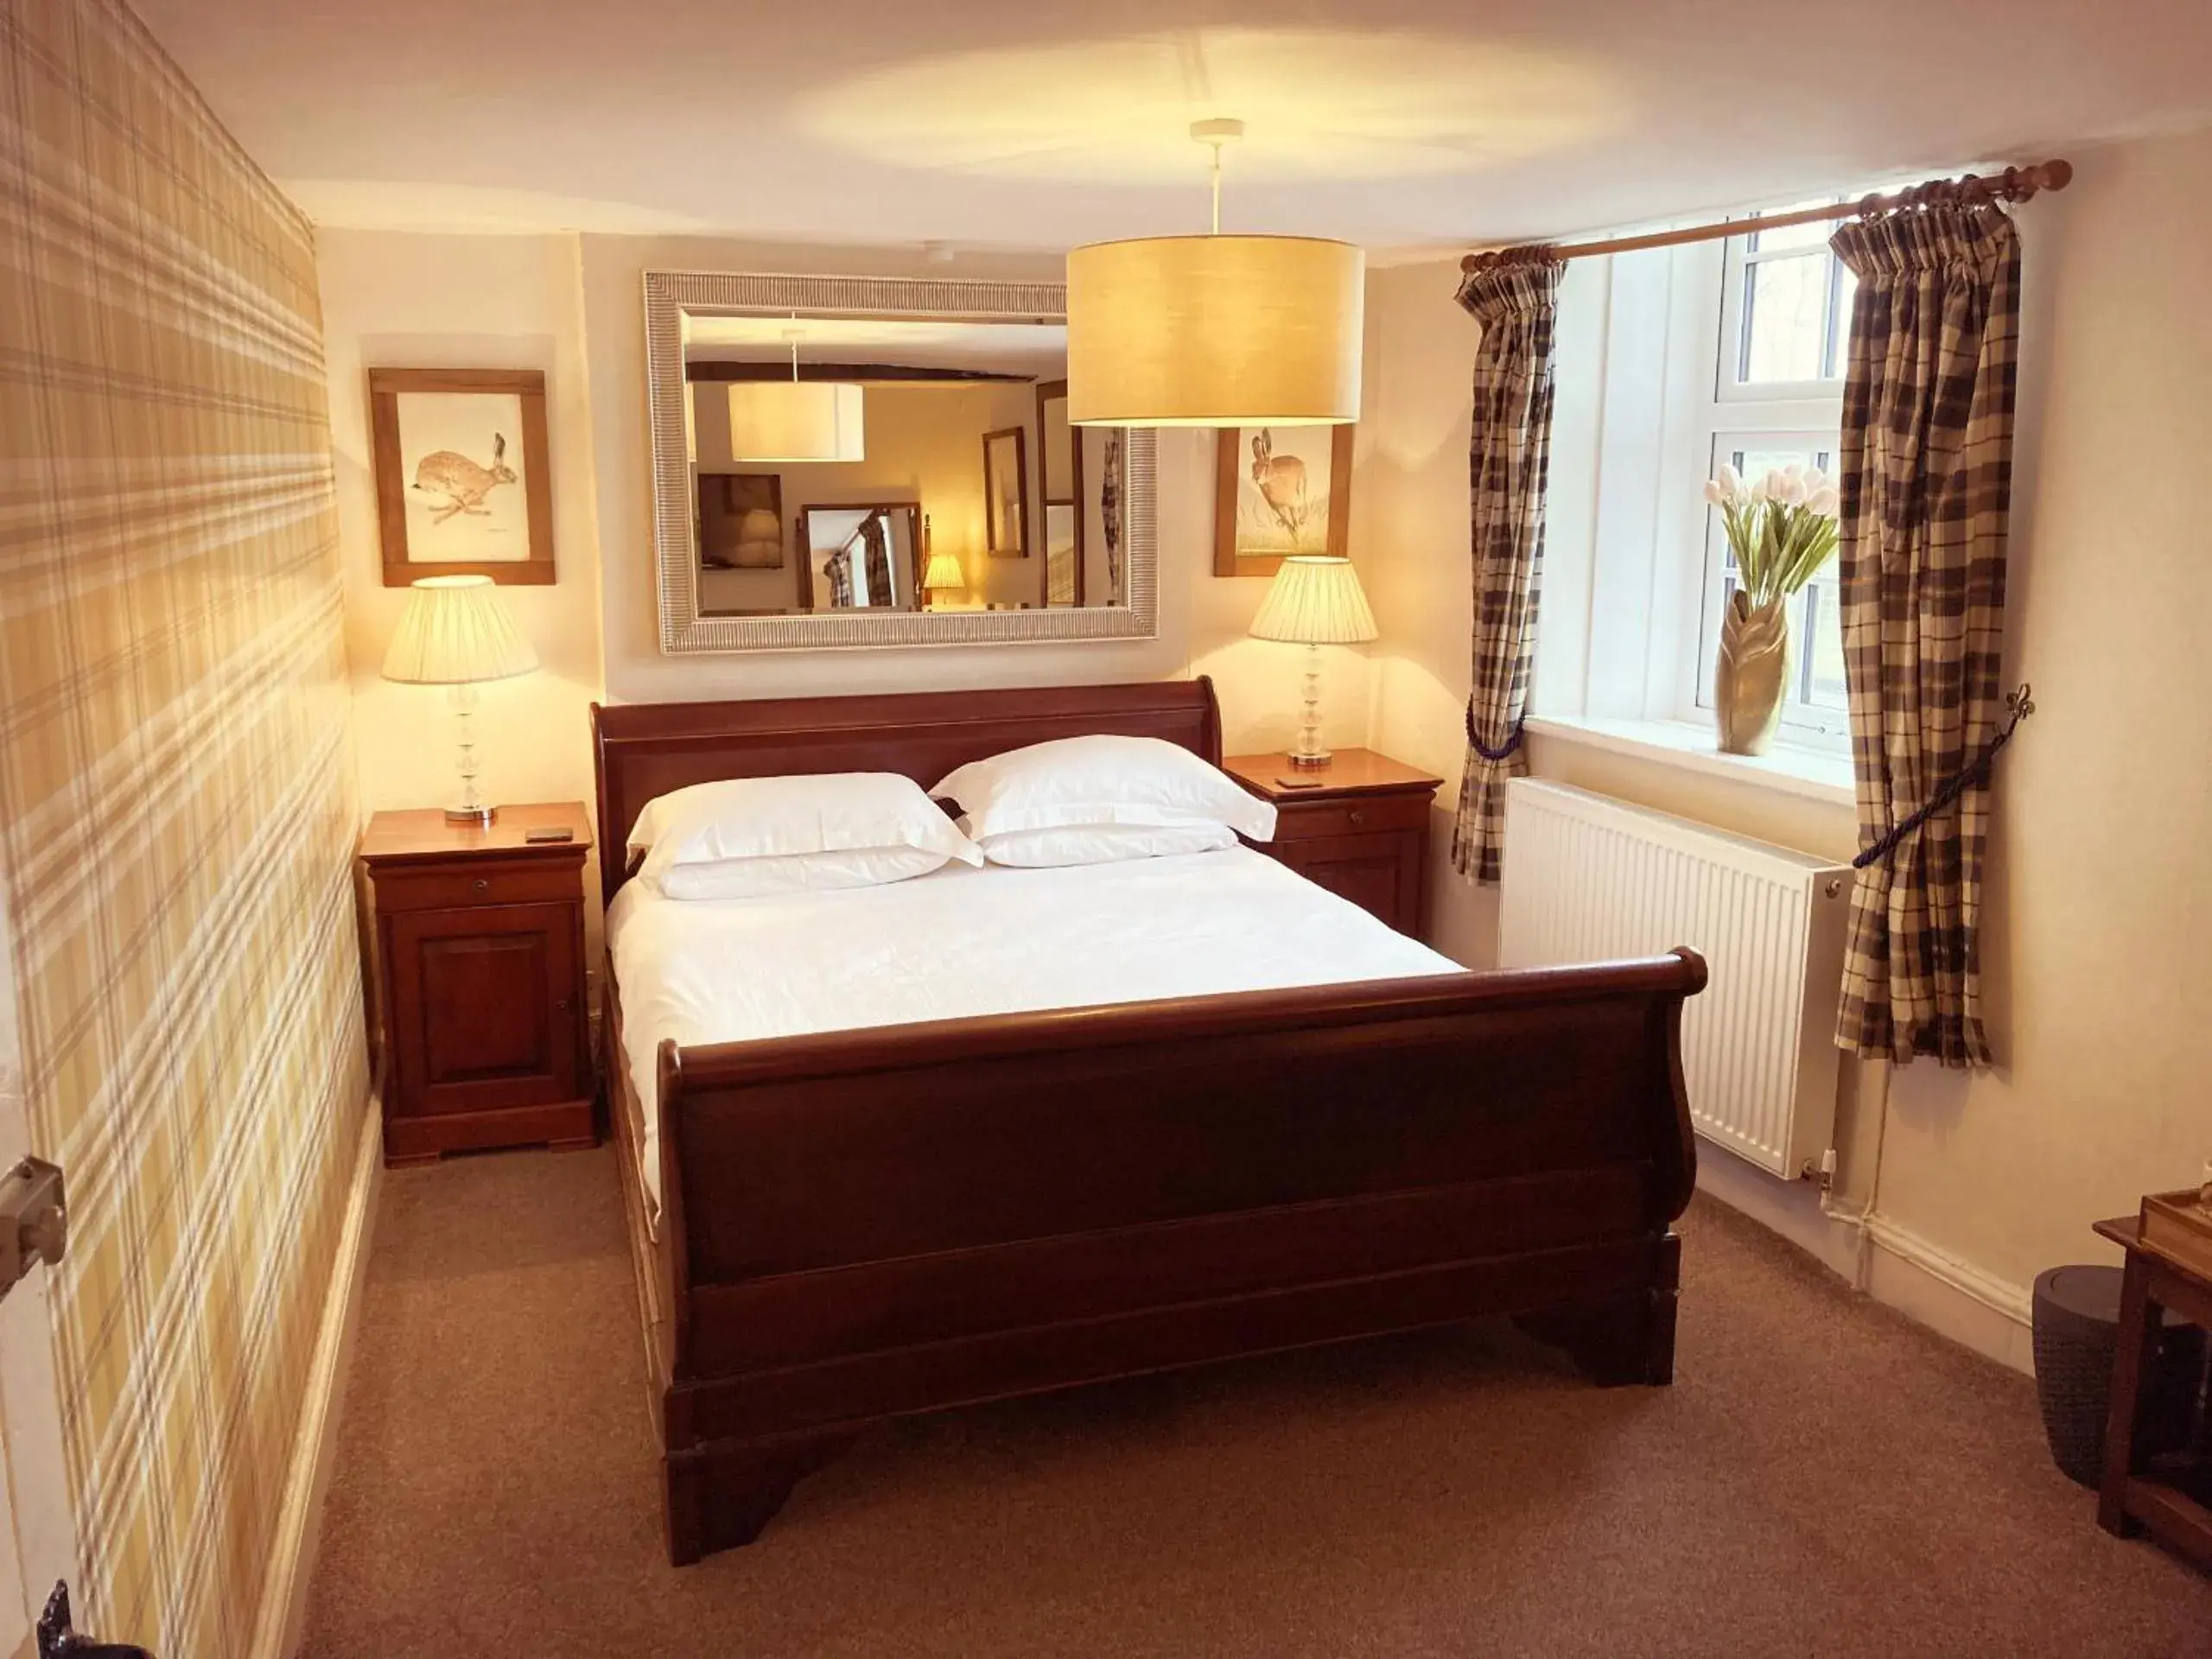 Standard King Room - single occupancy in Inn for All Seasons